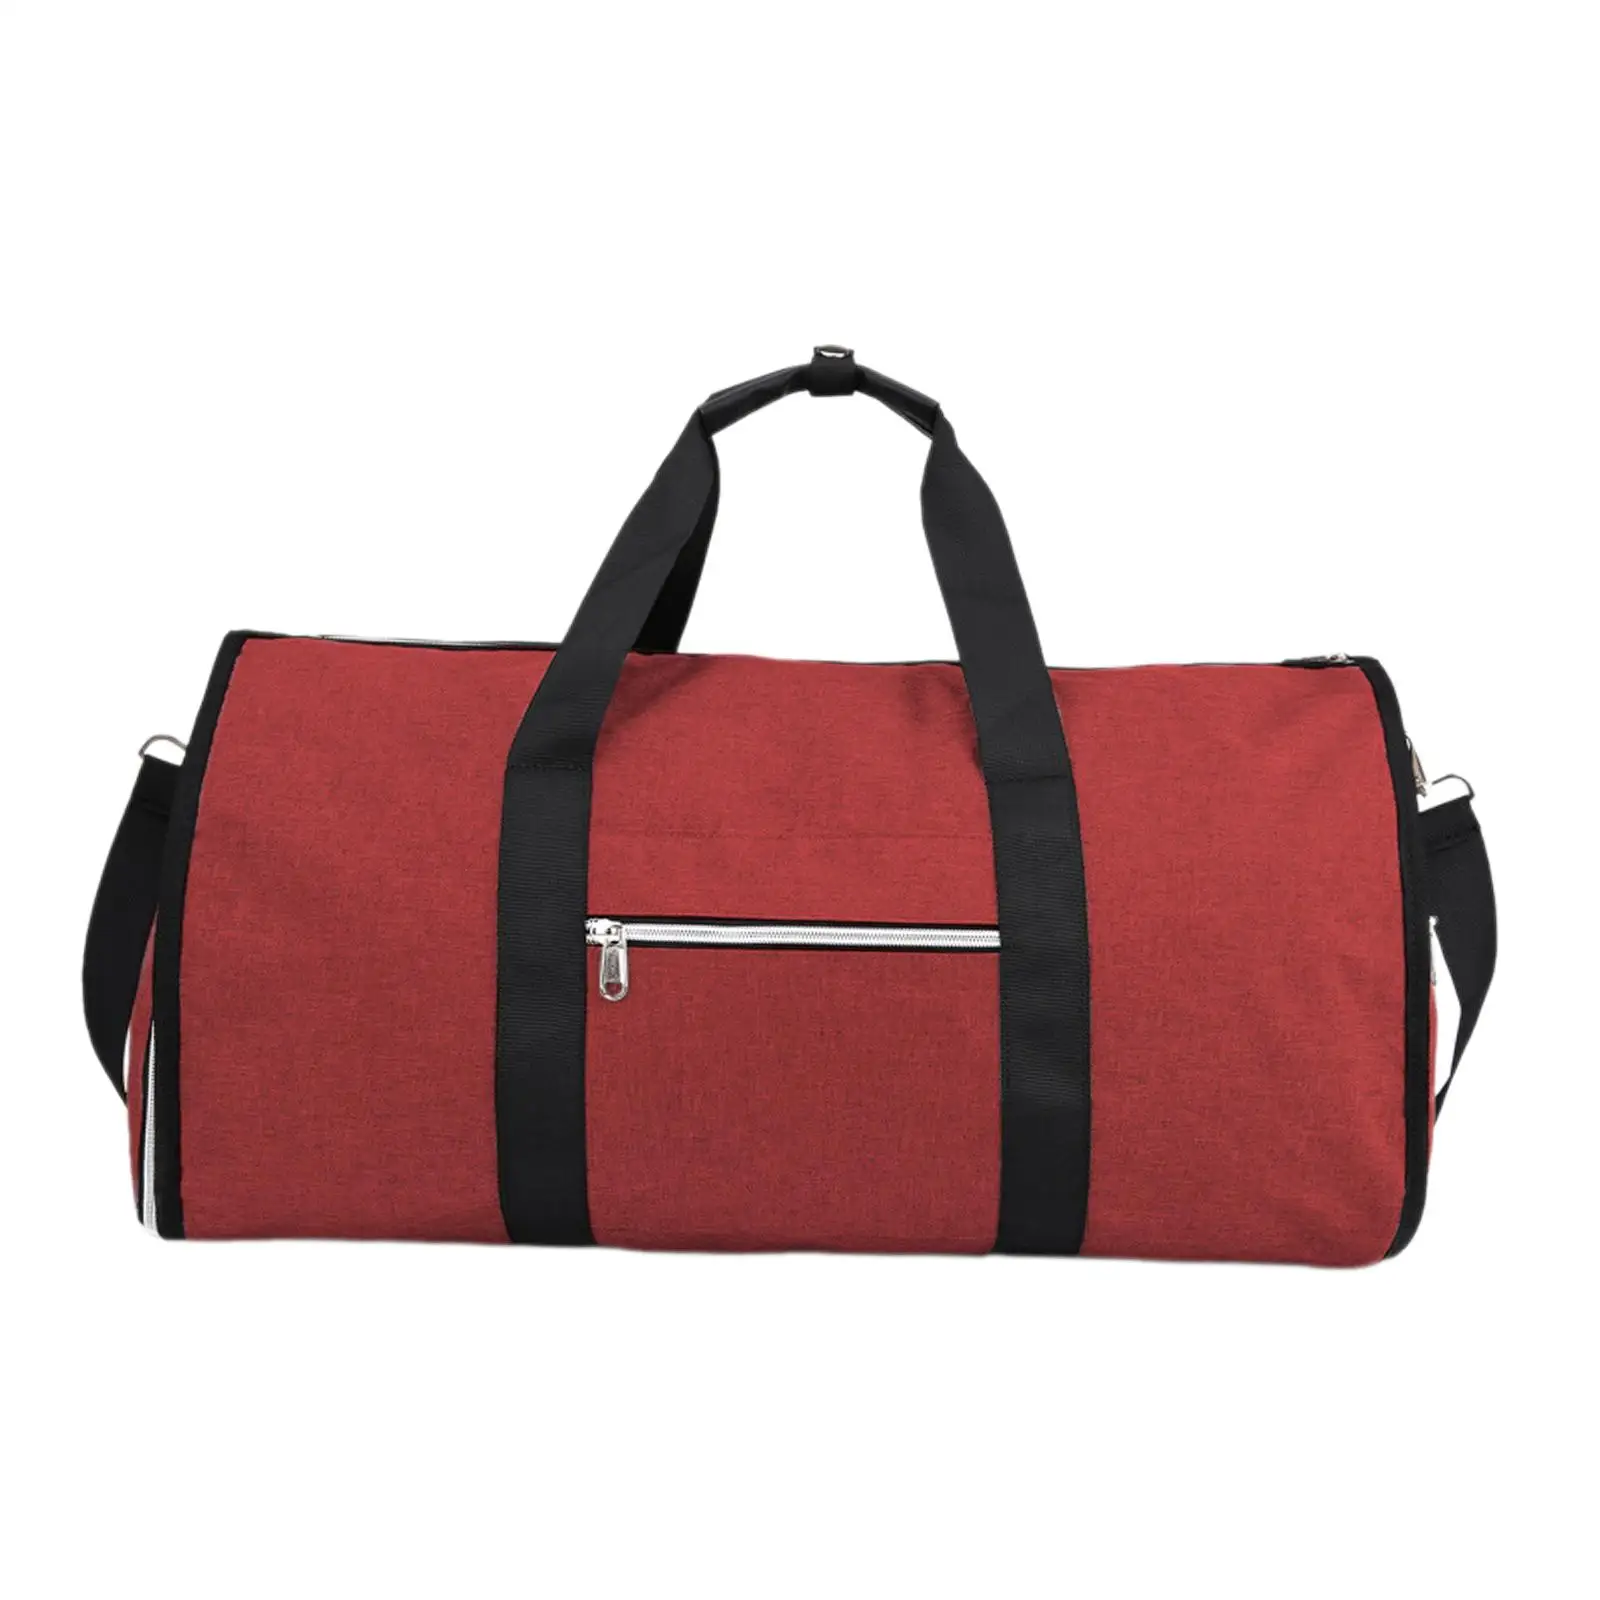 Garment Duffel Bag Multipurpose Travel Duffel Bag for Business Outdoor Trips